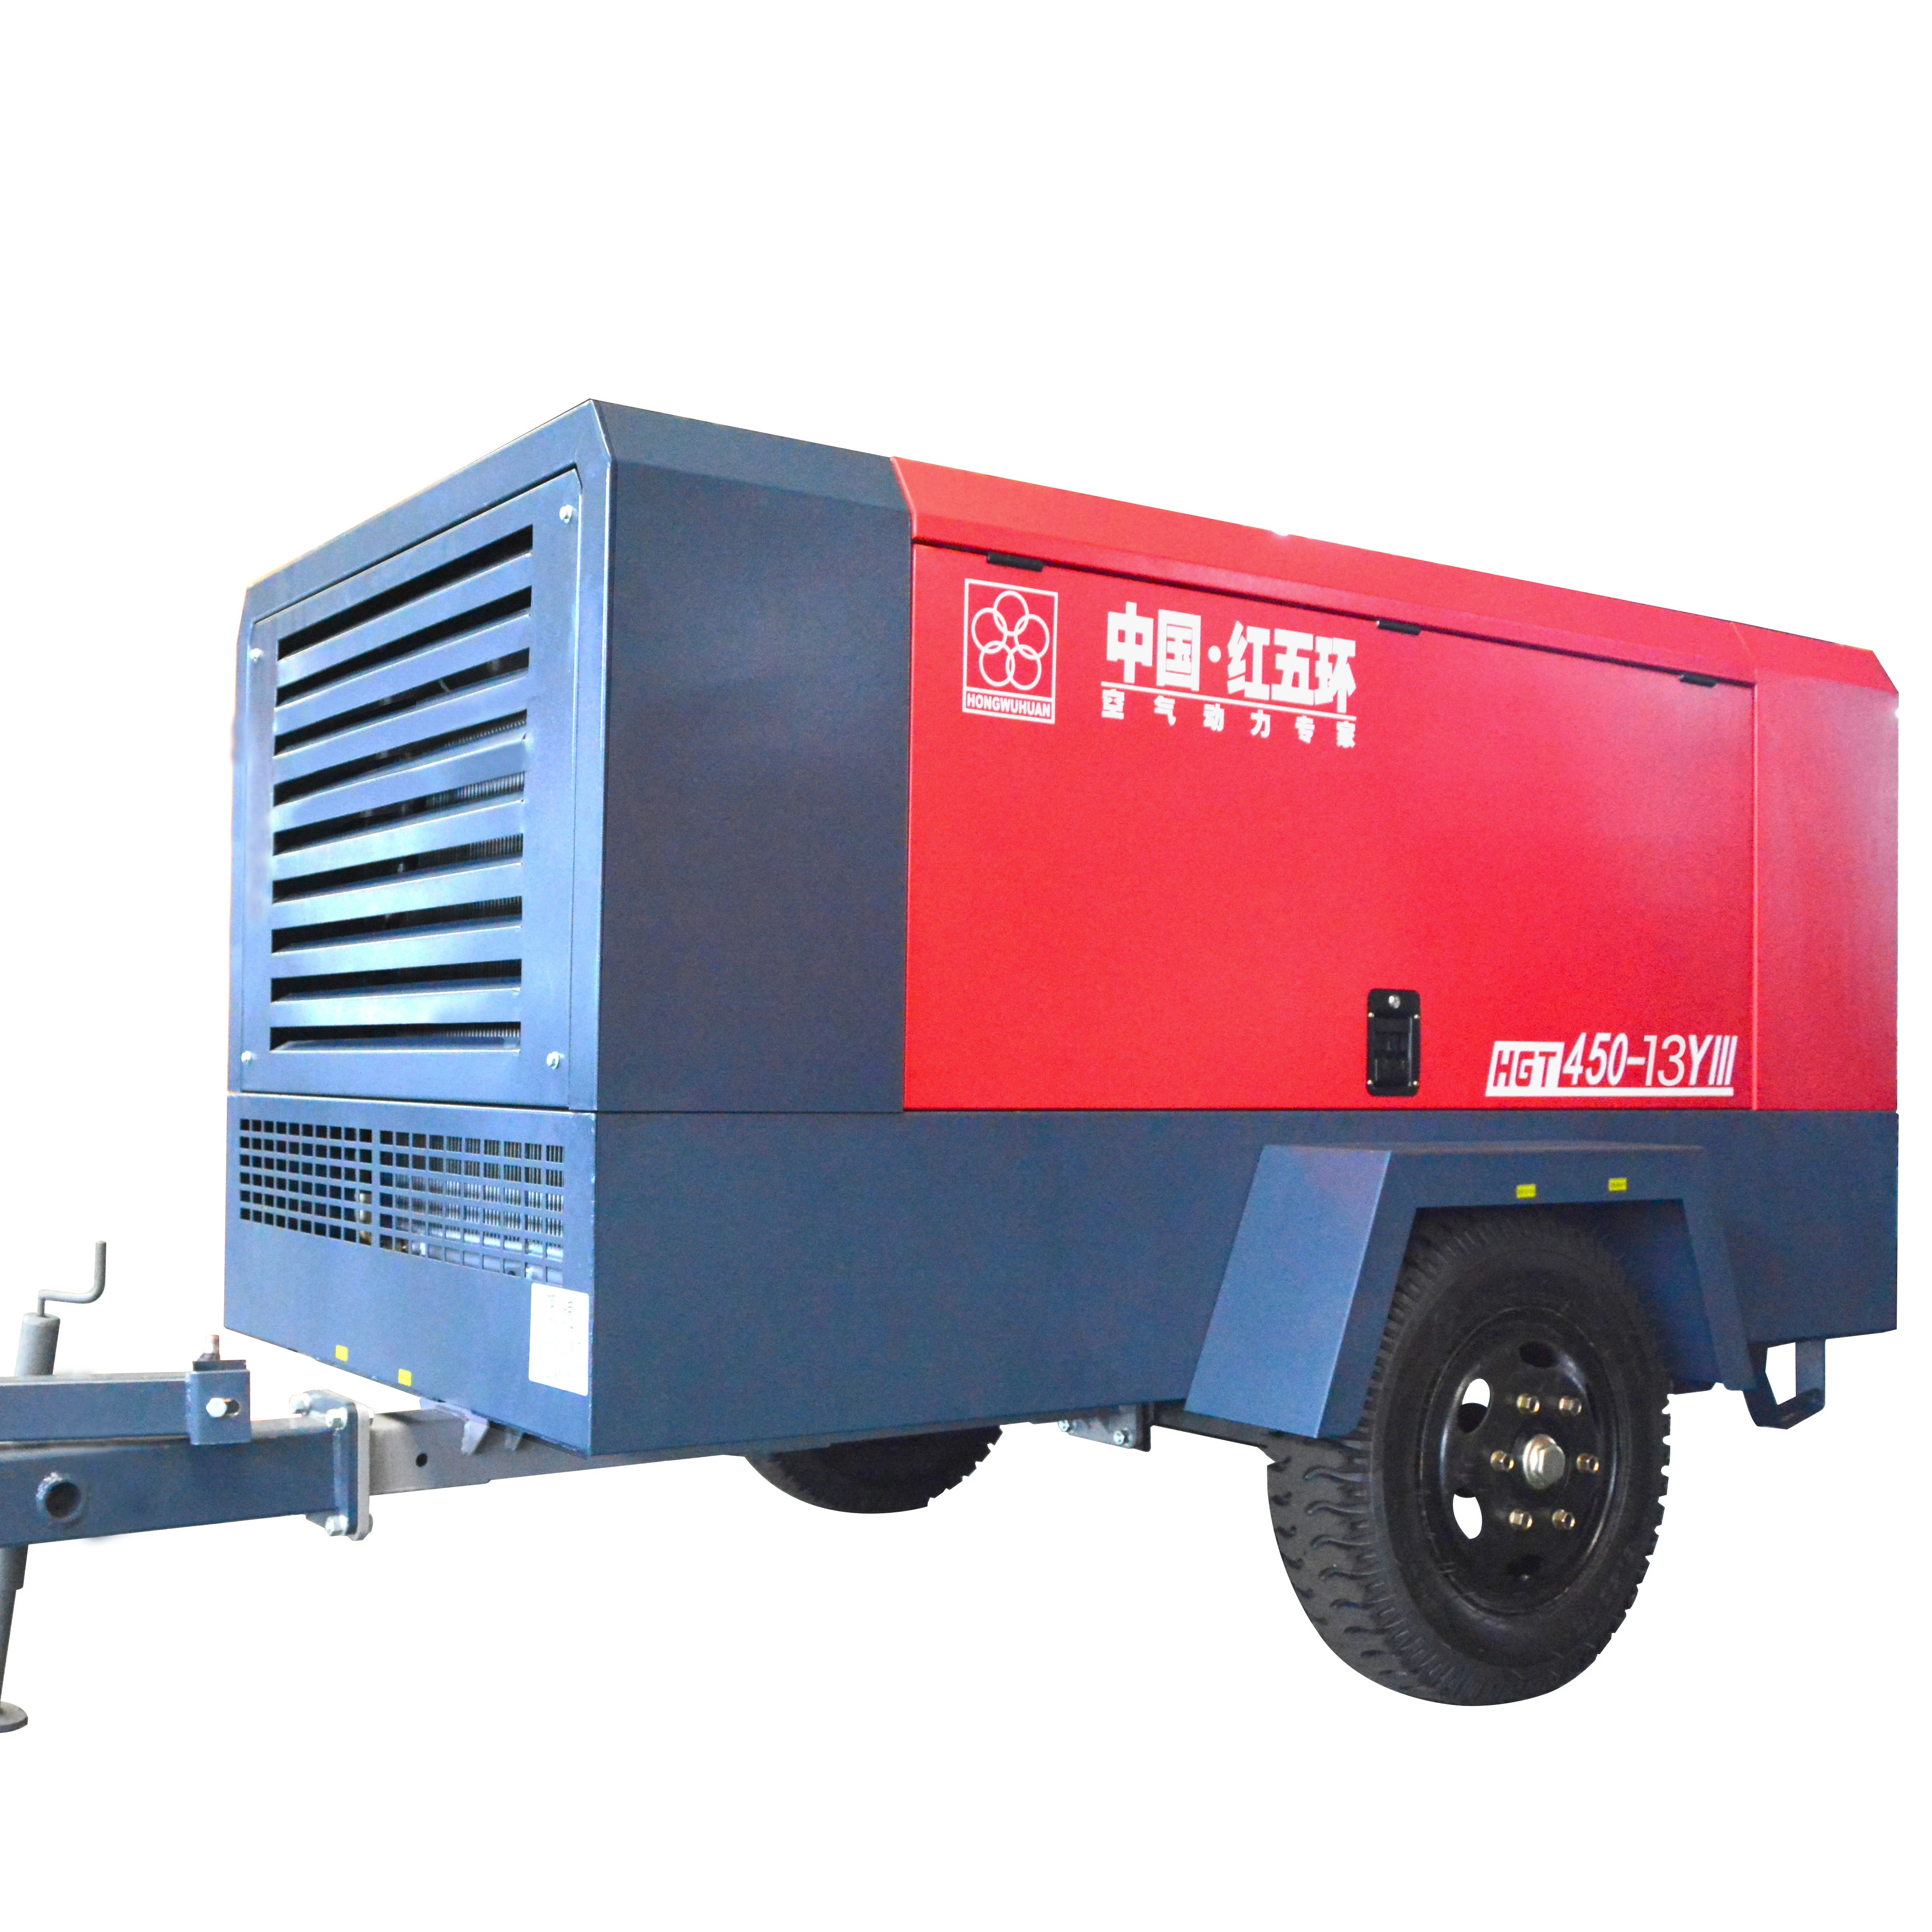 Hongwuhuan HGT400-13Y Hot portable industrial 400cfm 13bar diesel portable screw air compressor for mining rig